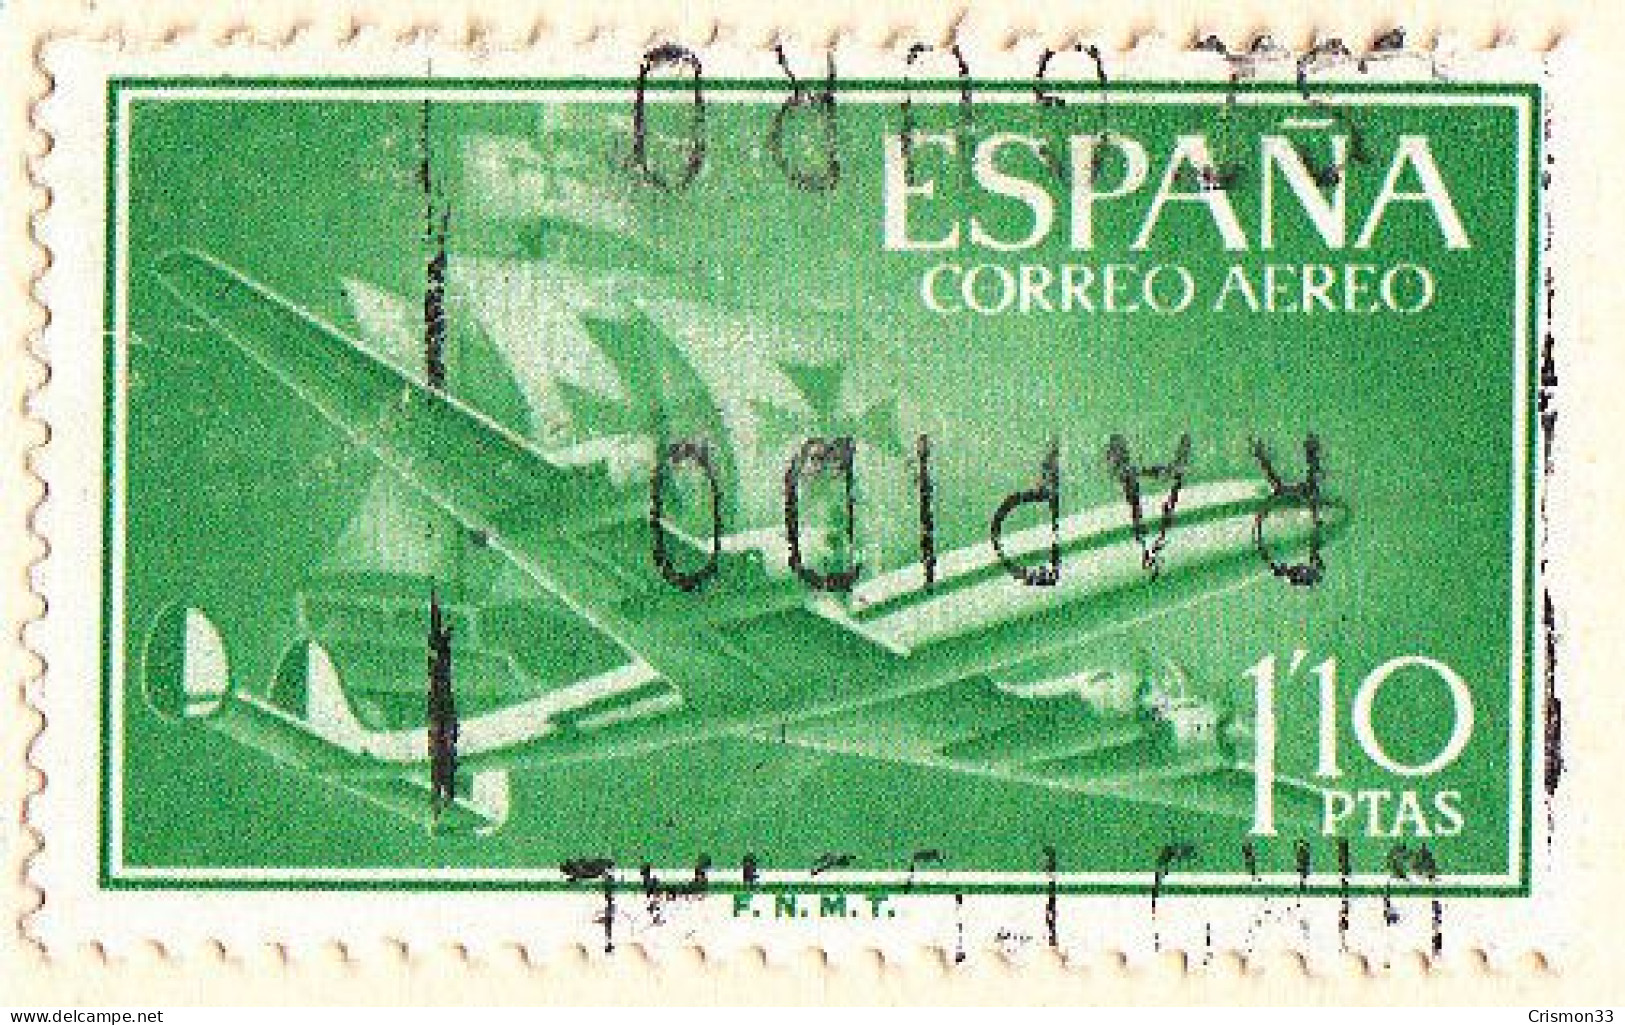 1955 - 1956 - ESPAÑA - SUPERCOSTELLATION Y NAO SANTA MARIA - EDIFIL 1173 - Usados